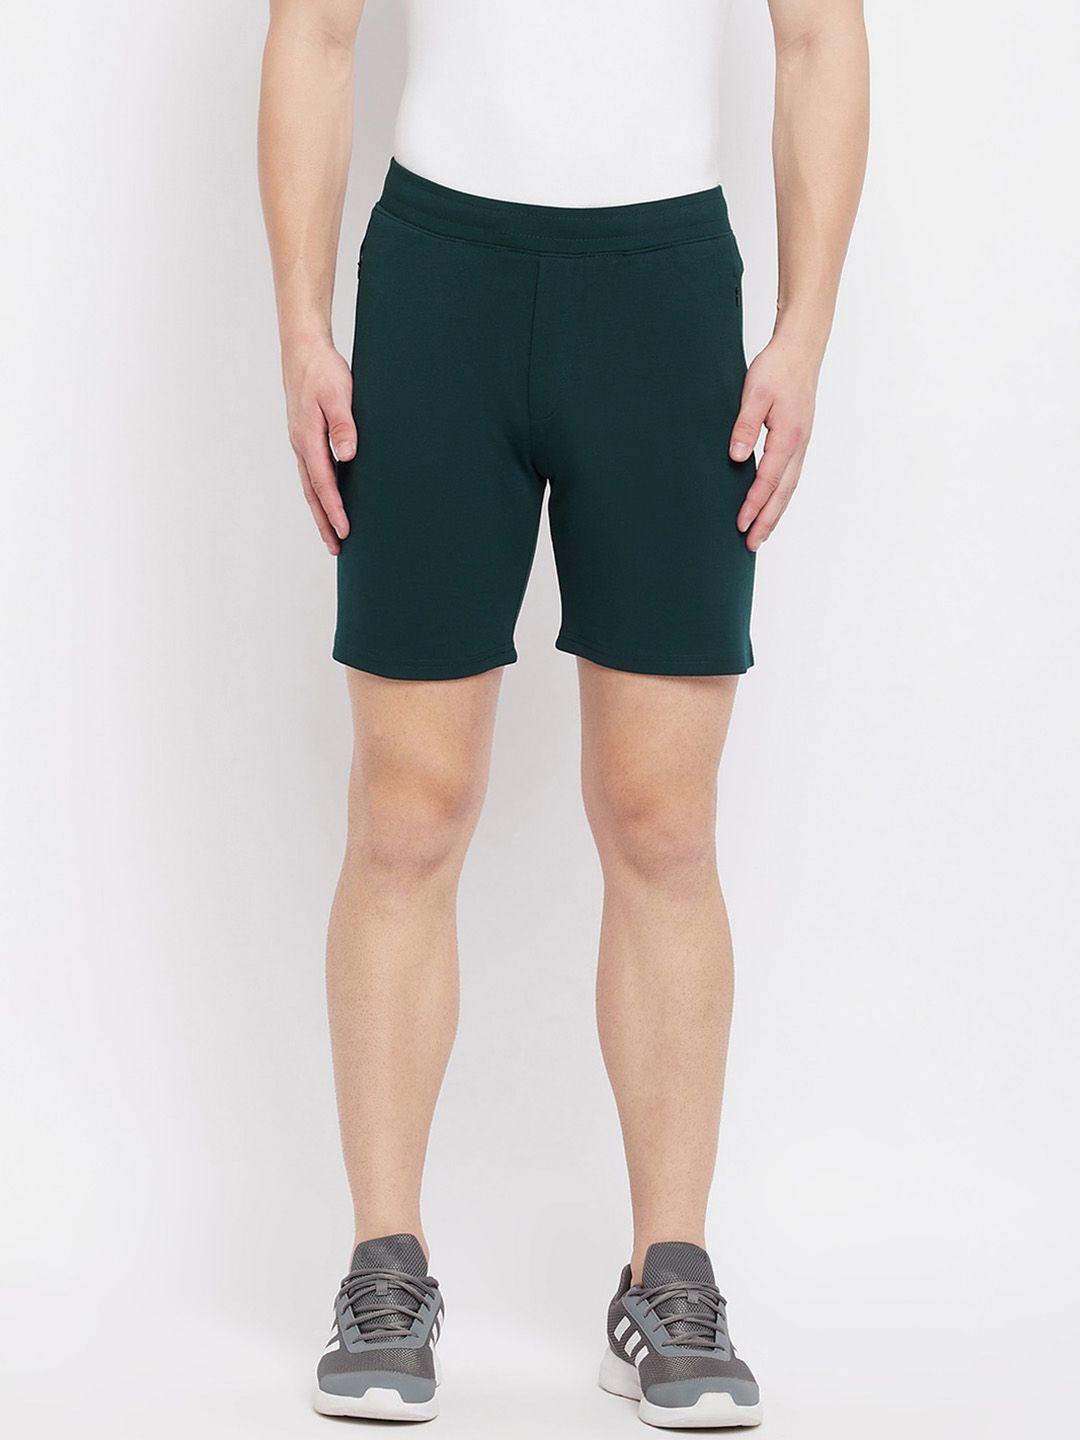 okane-men-green-sports-shorts